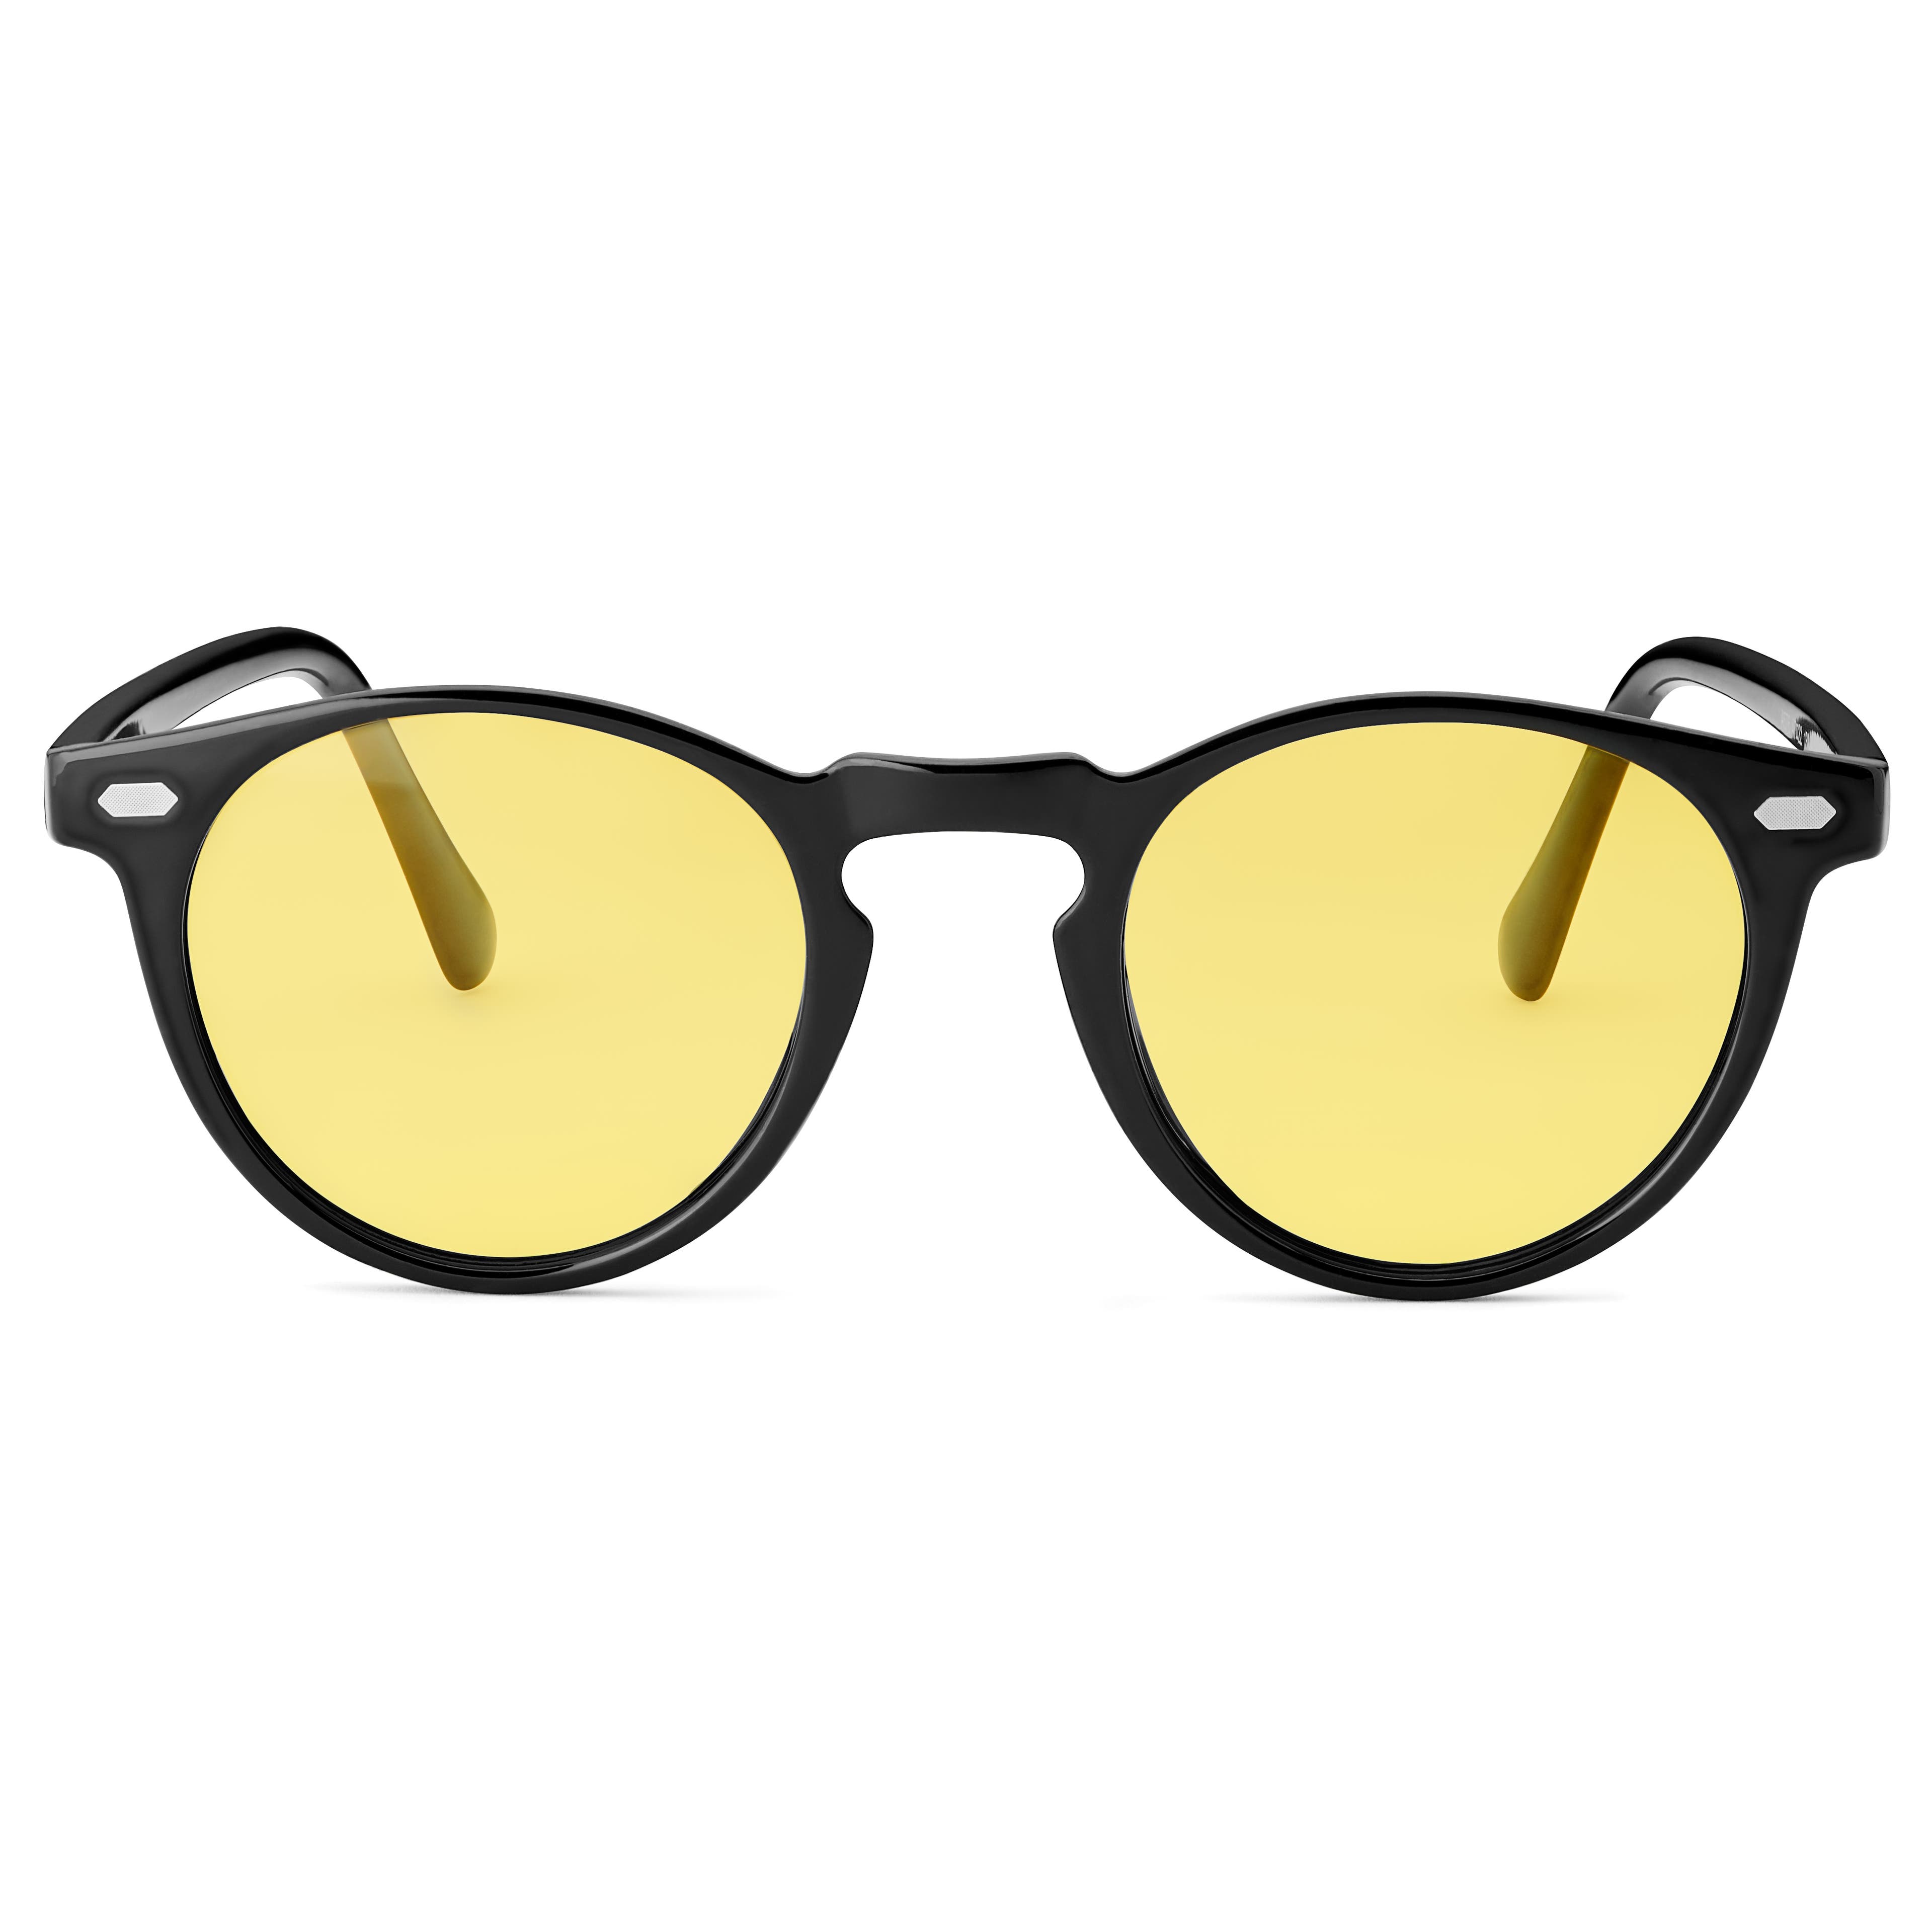 Black & Yellow Round Polarised Sunglasses